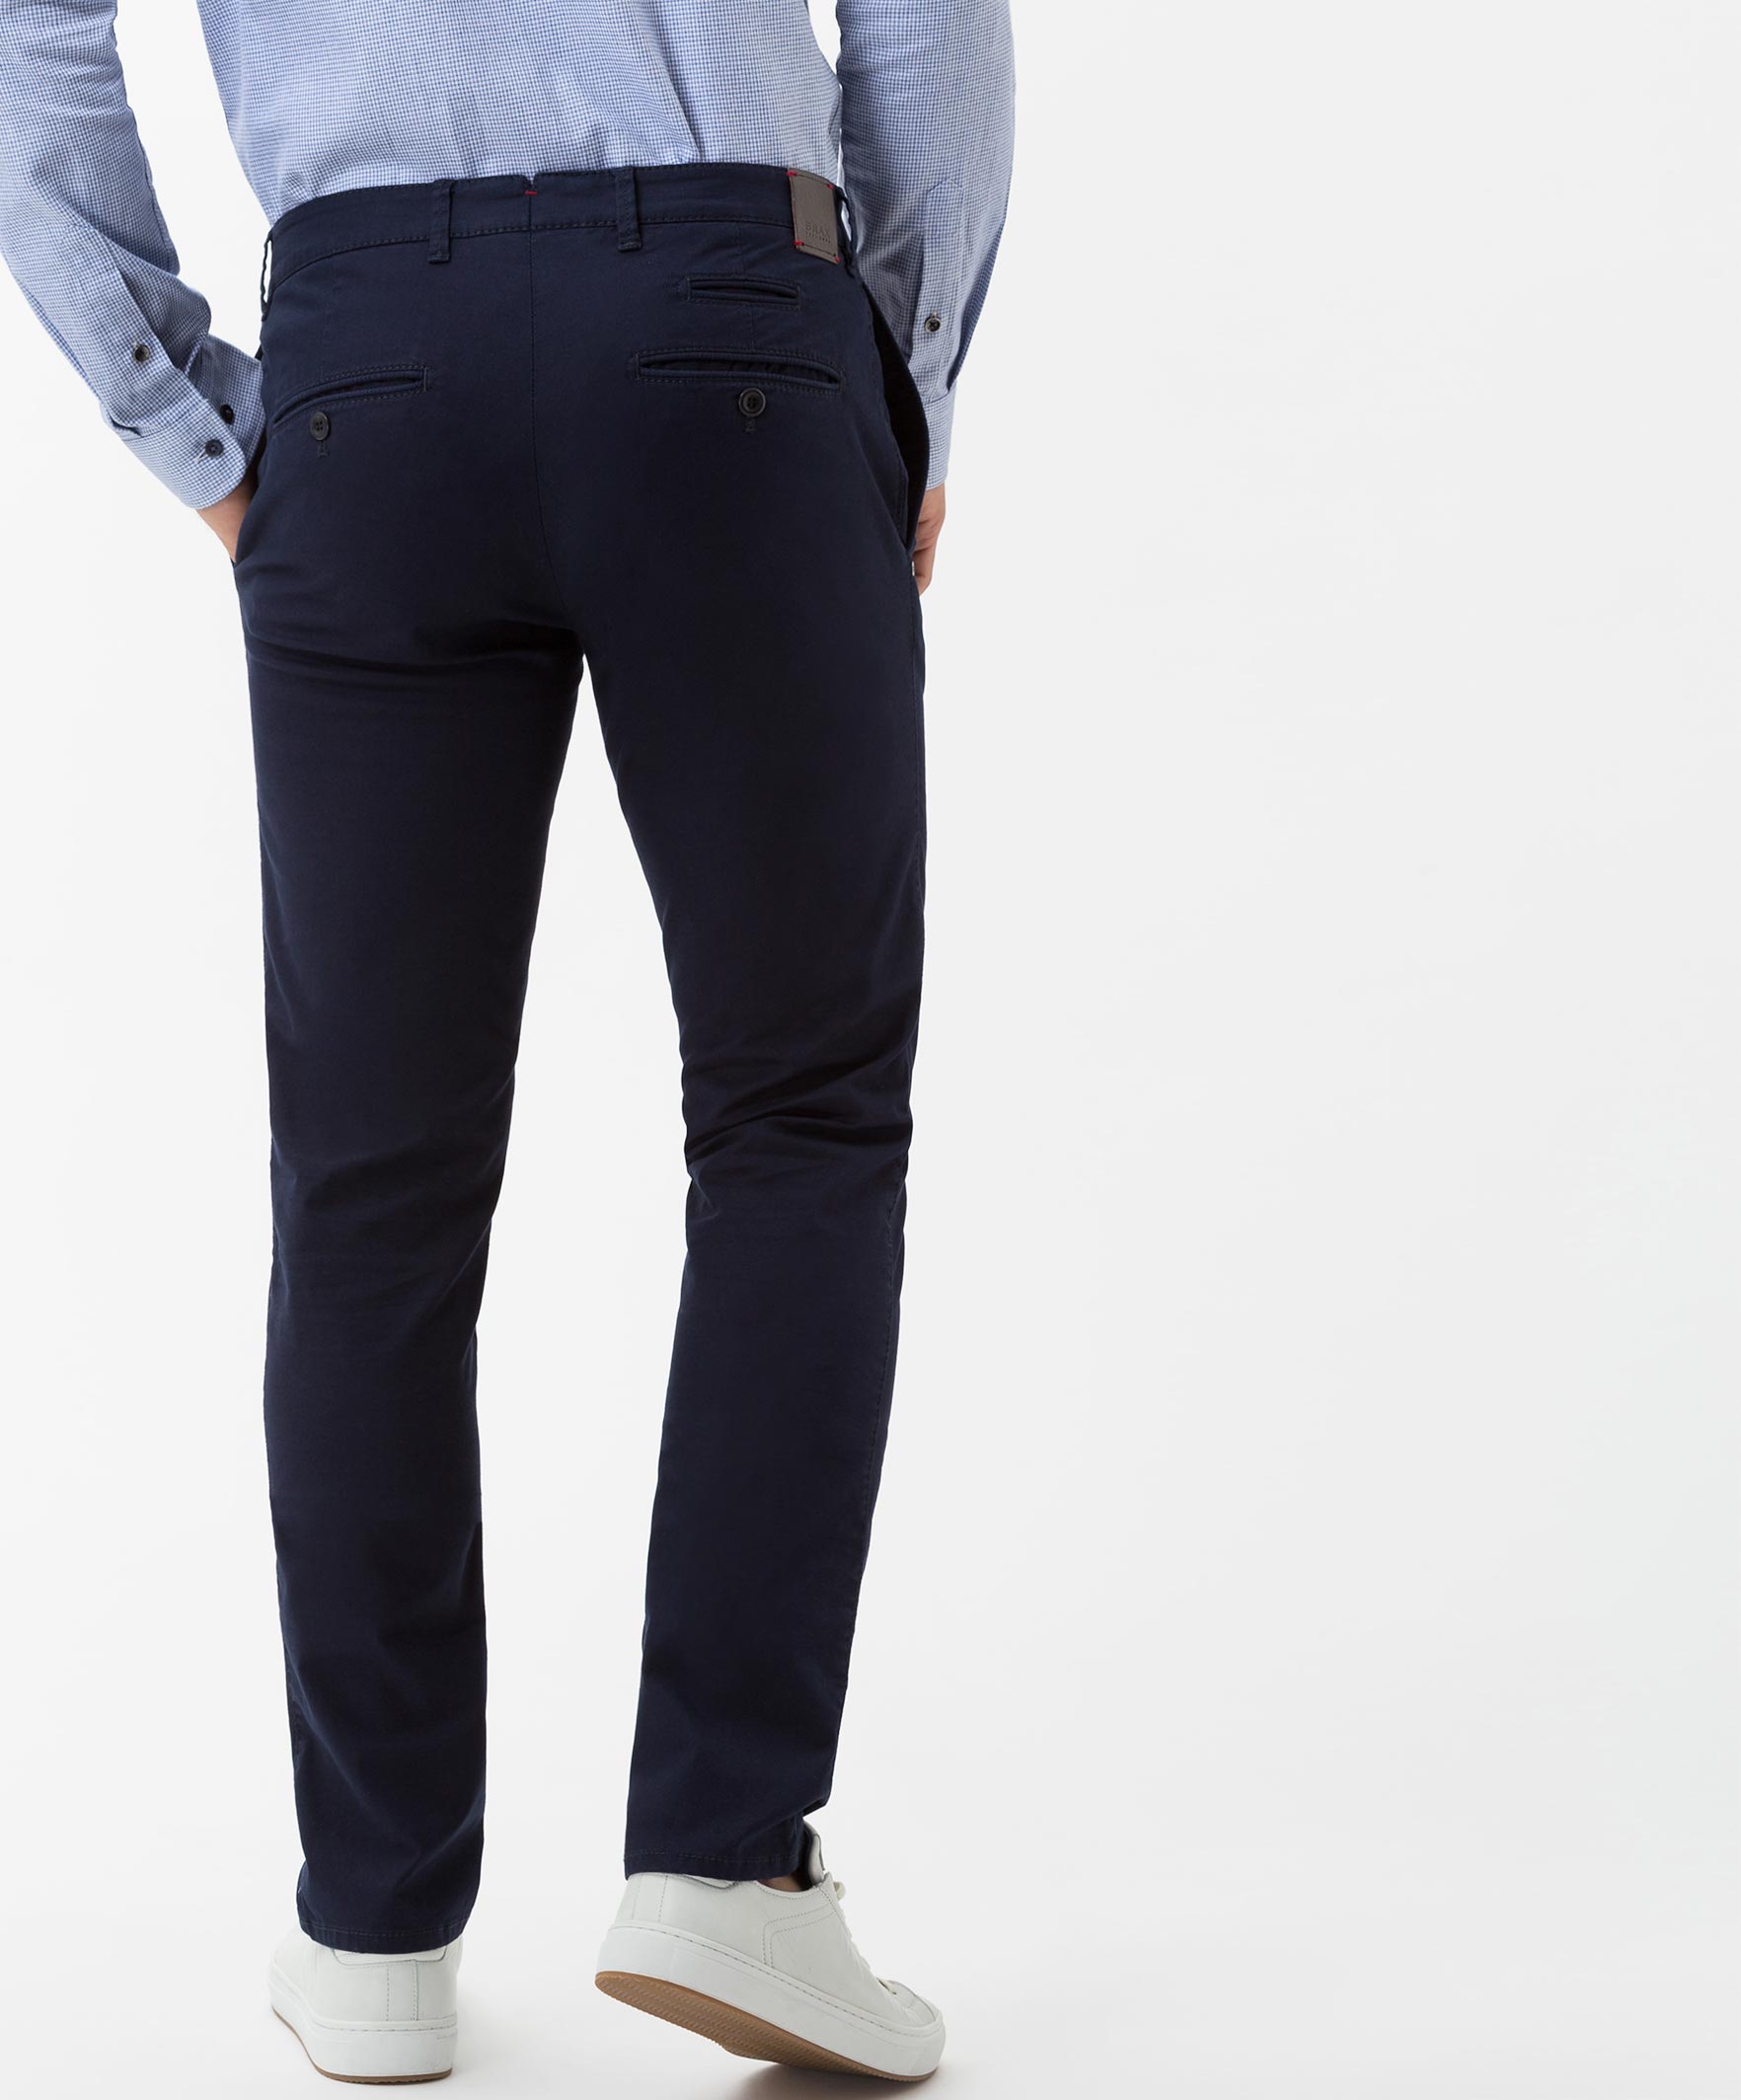 Brax Fabio In Hi-Flex Pants Navy | Jan Rozing Men's Fashion